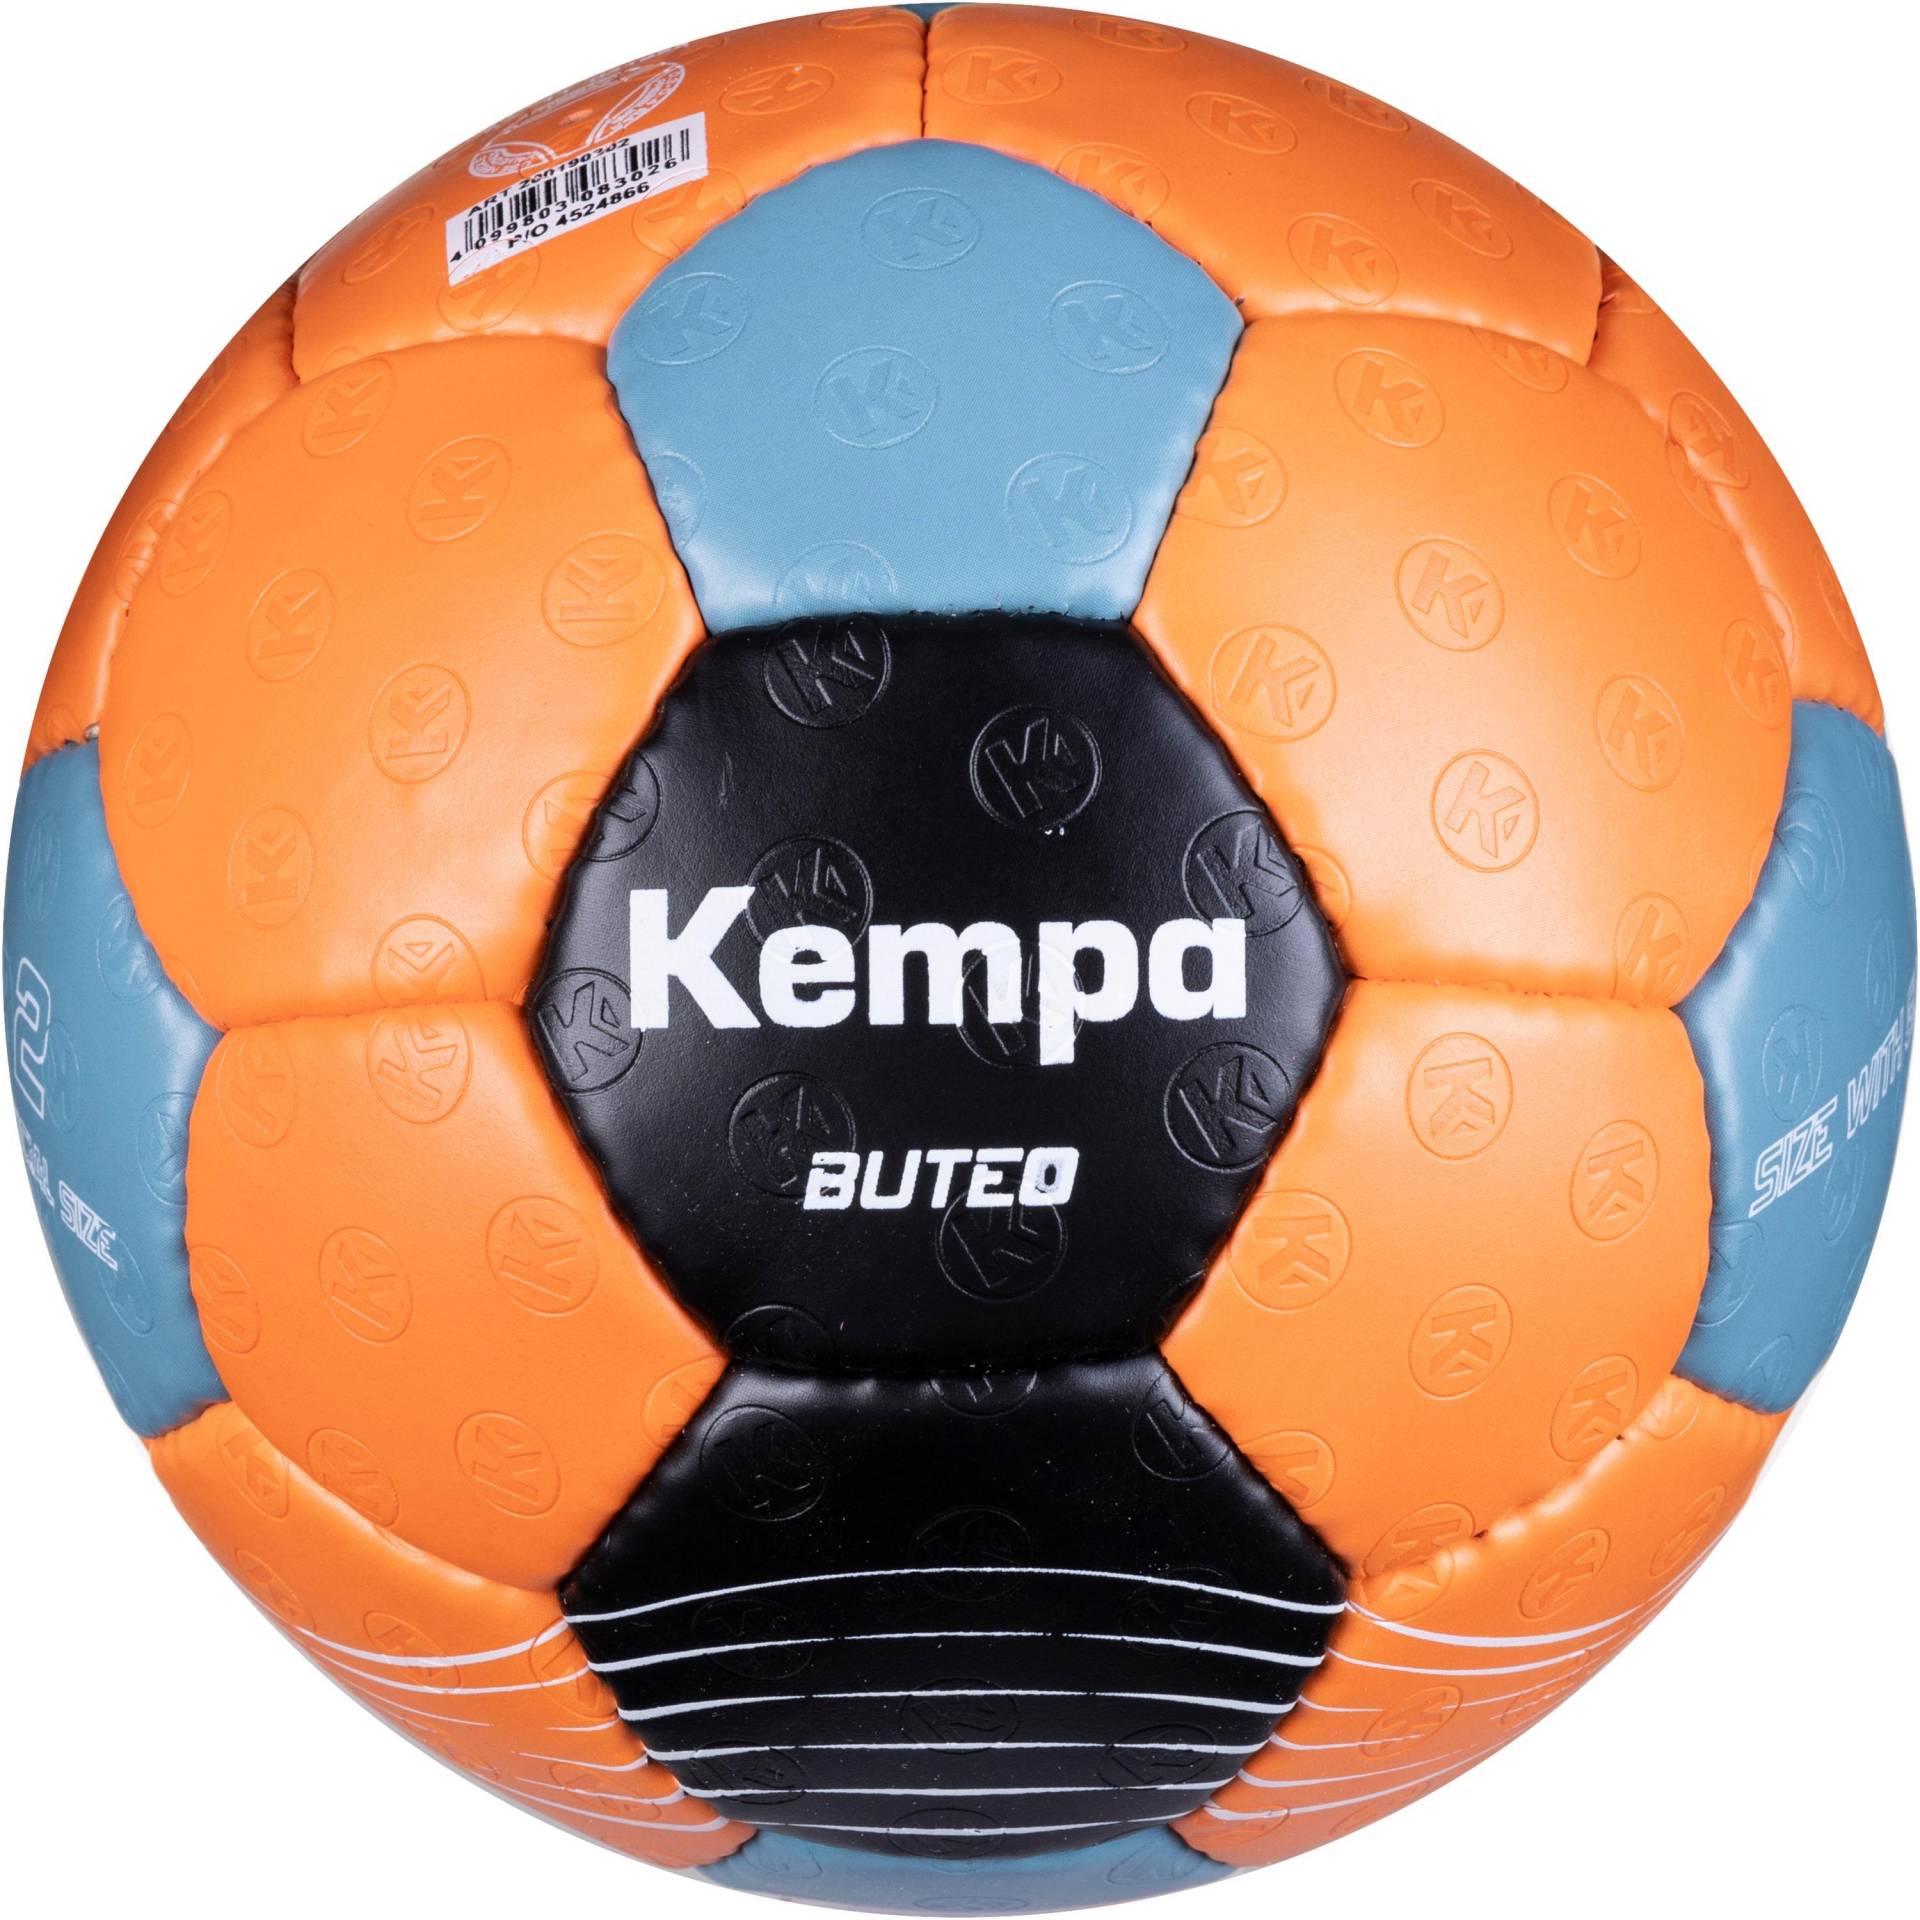 Kempa BUTEO Handball von kempa